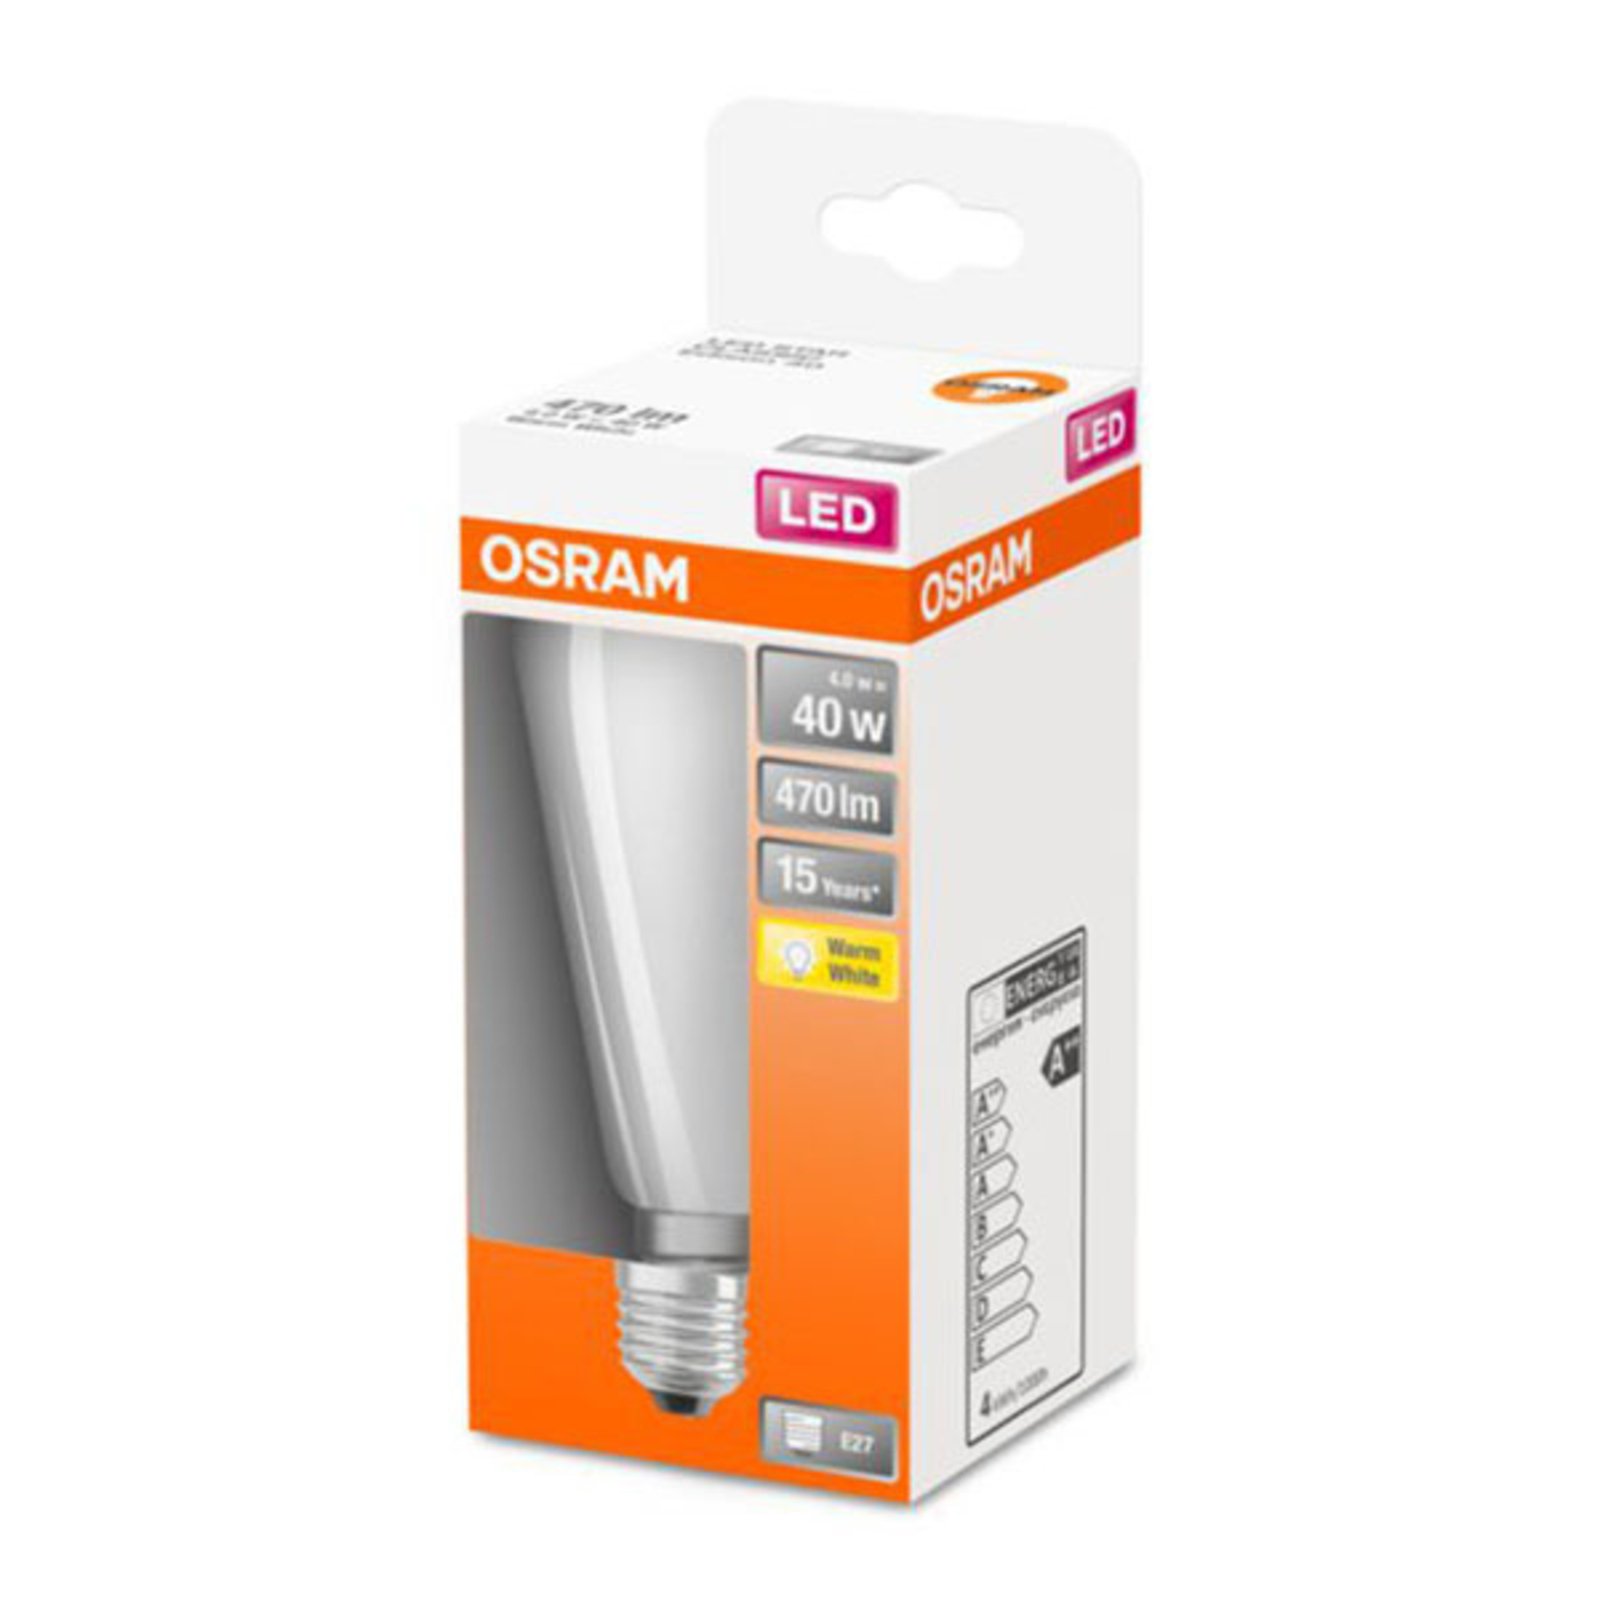 OSRAM Classic ST ampoule LED E27 4 W 2 700 K opale